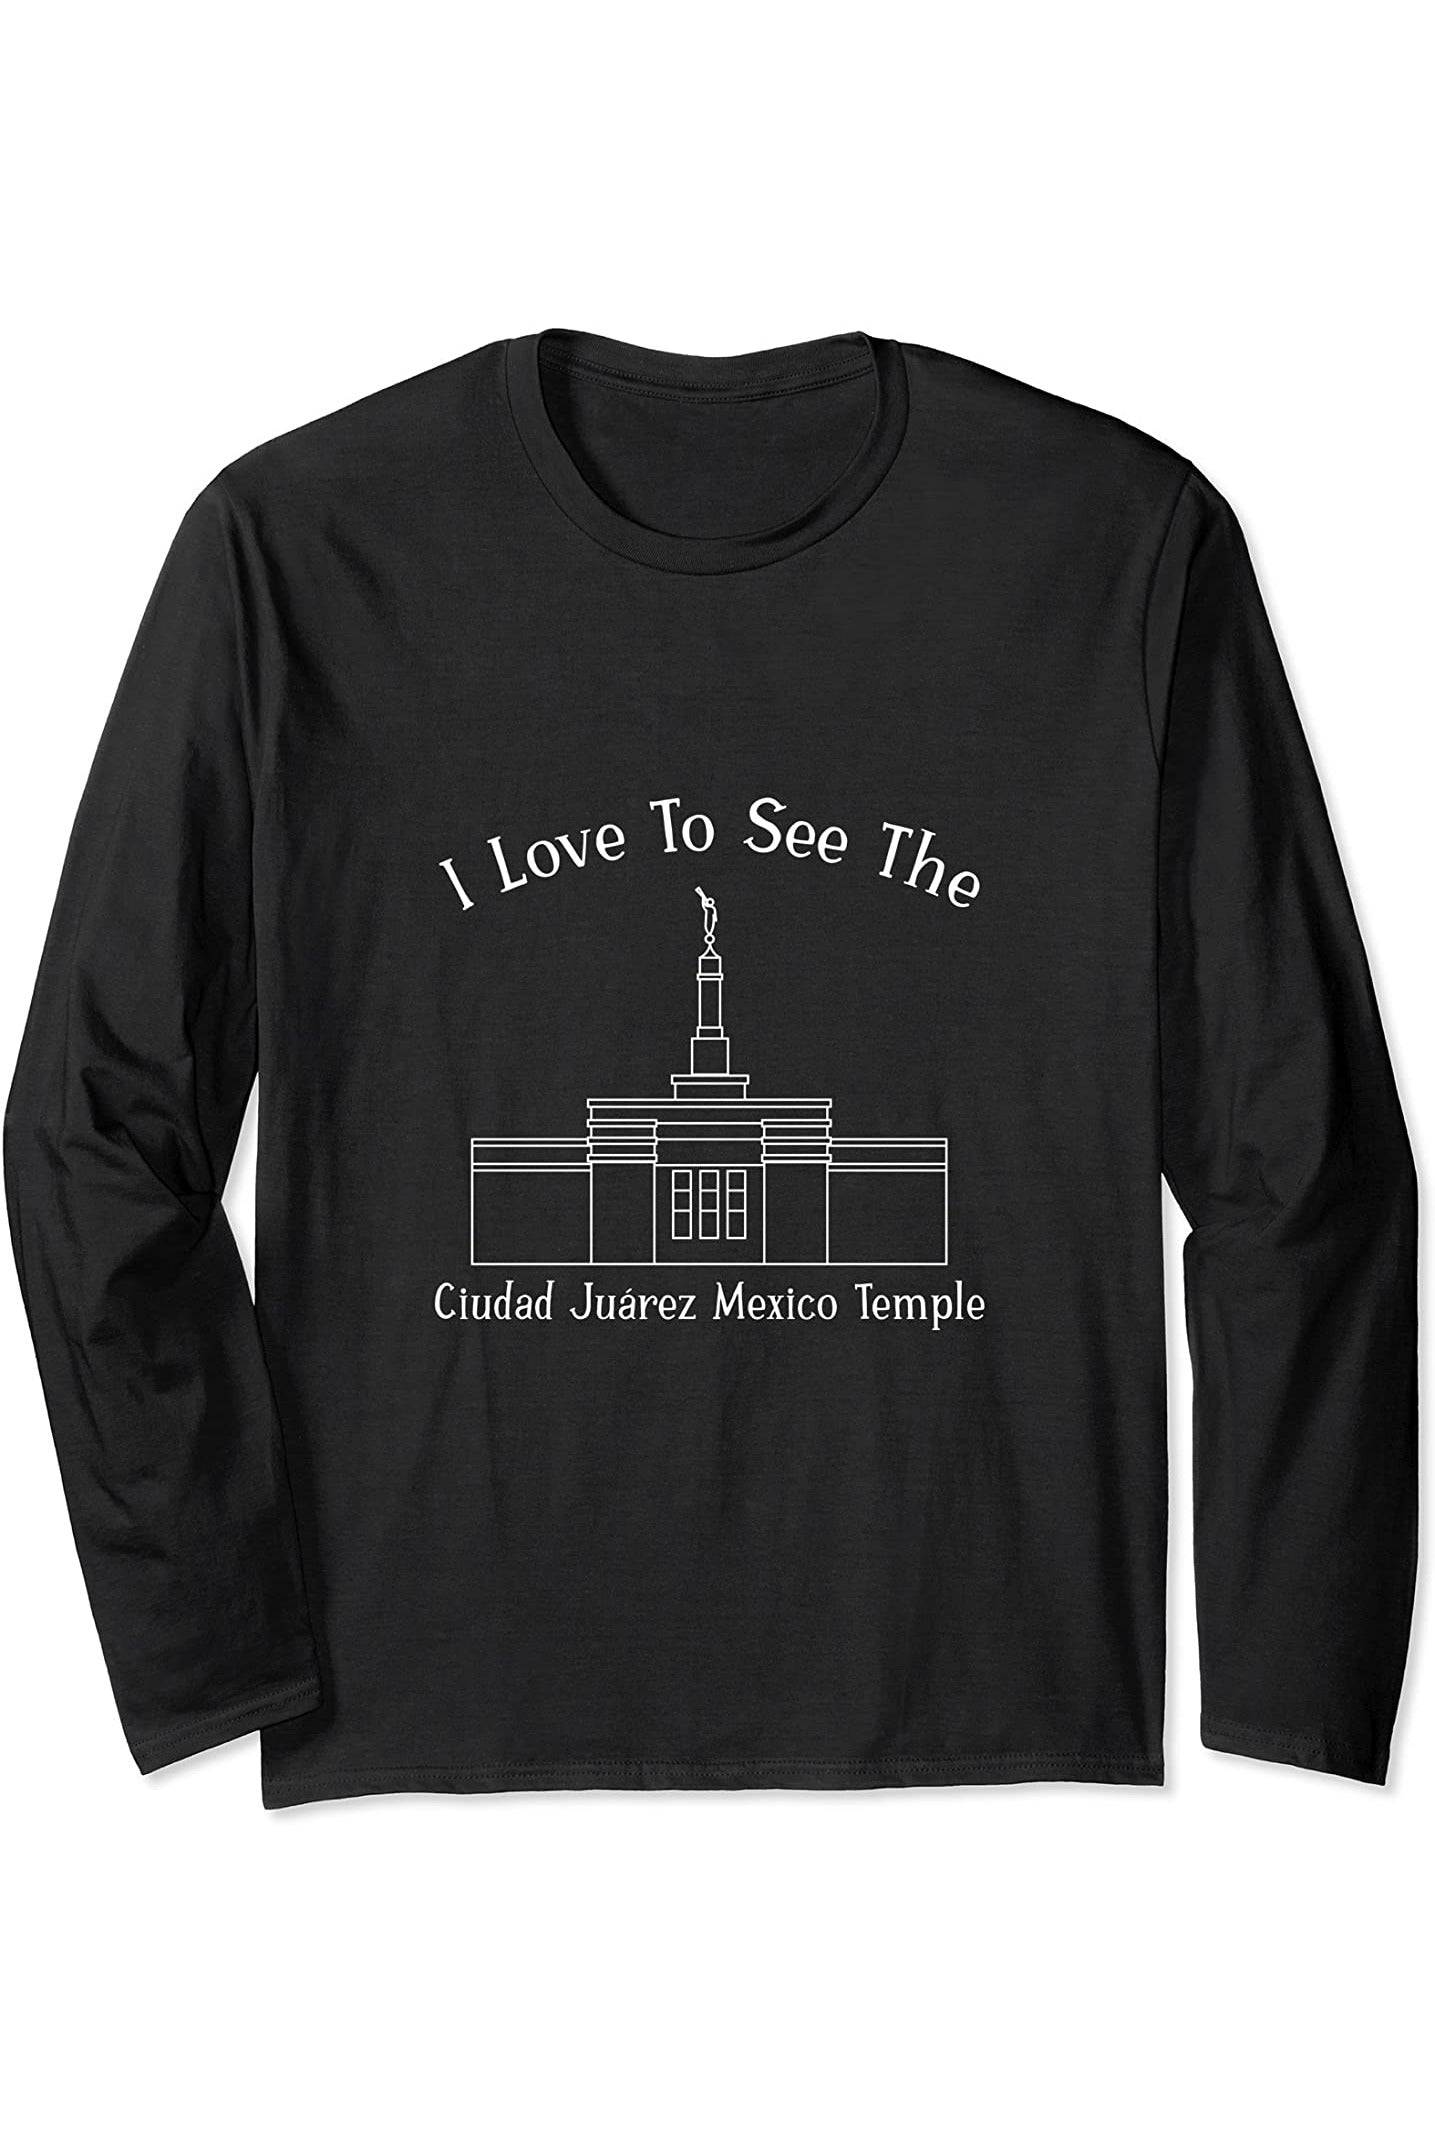 Ciudad Juarez Mexico Temple Long Sleeve T-Shirt - Happy Style (English) US